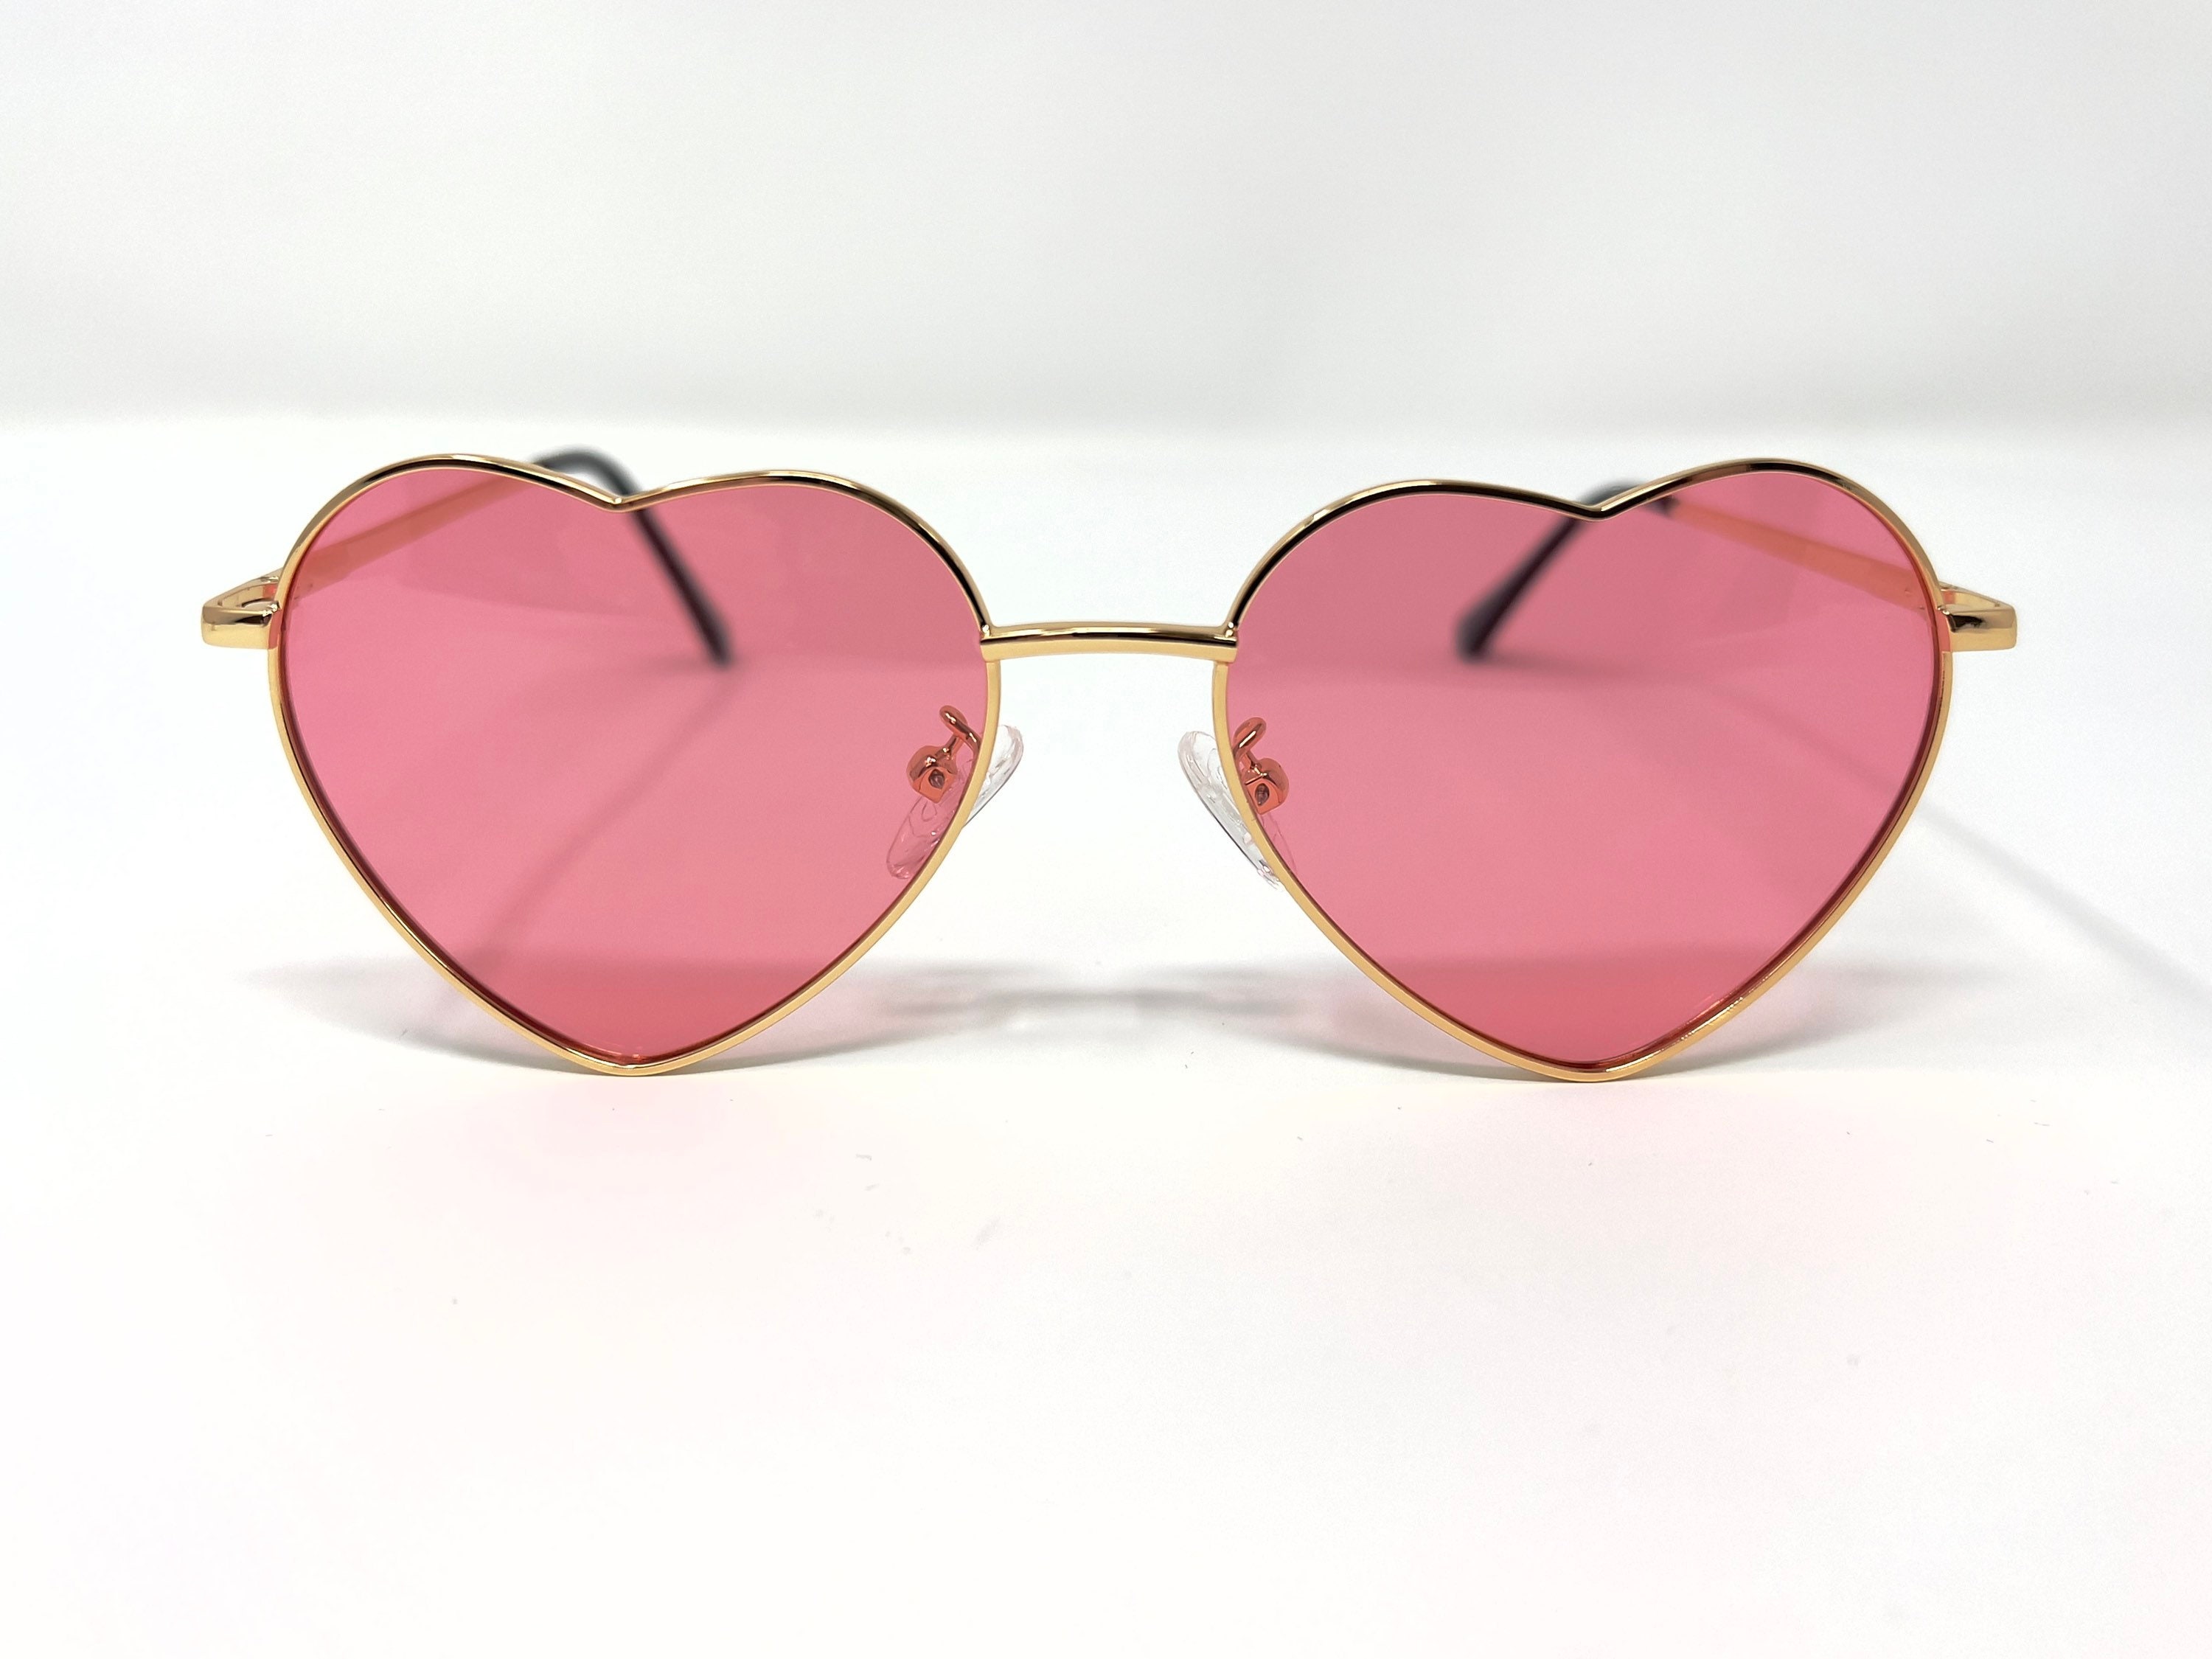 Heartbeat - Mirrored Heart Sunglasses Bad Bunny Heart Sunglasses